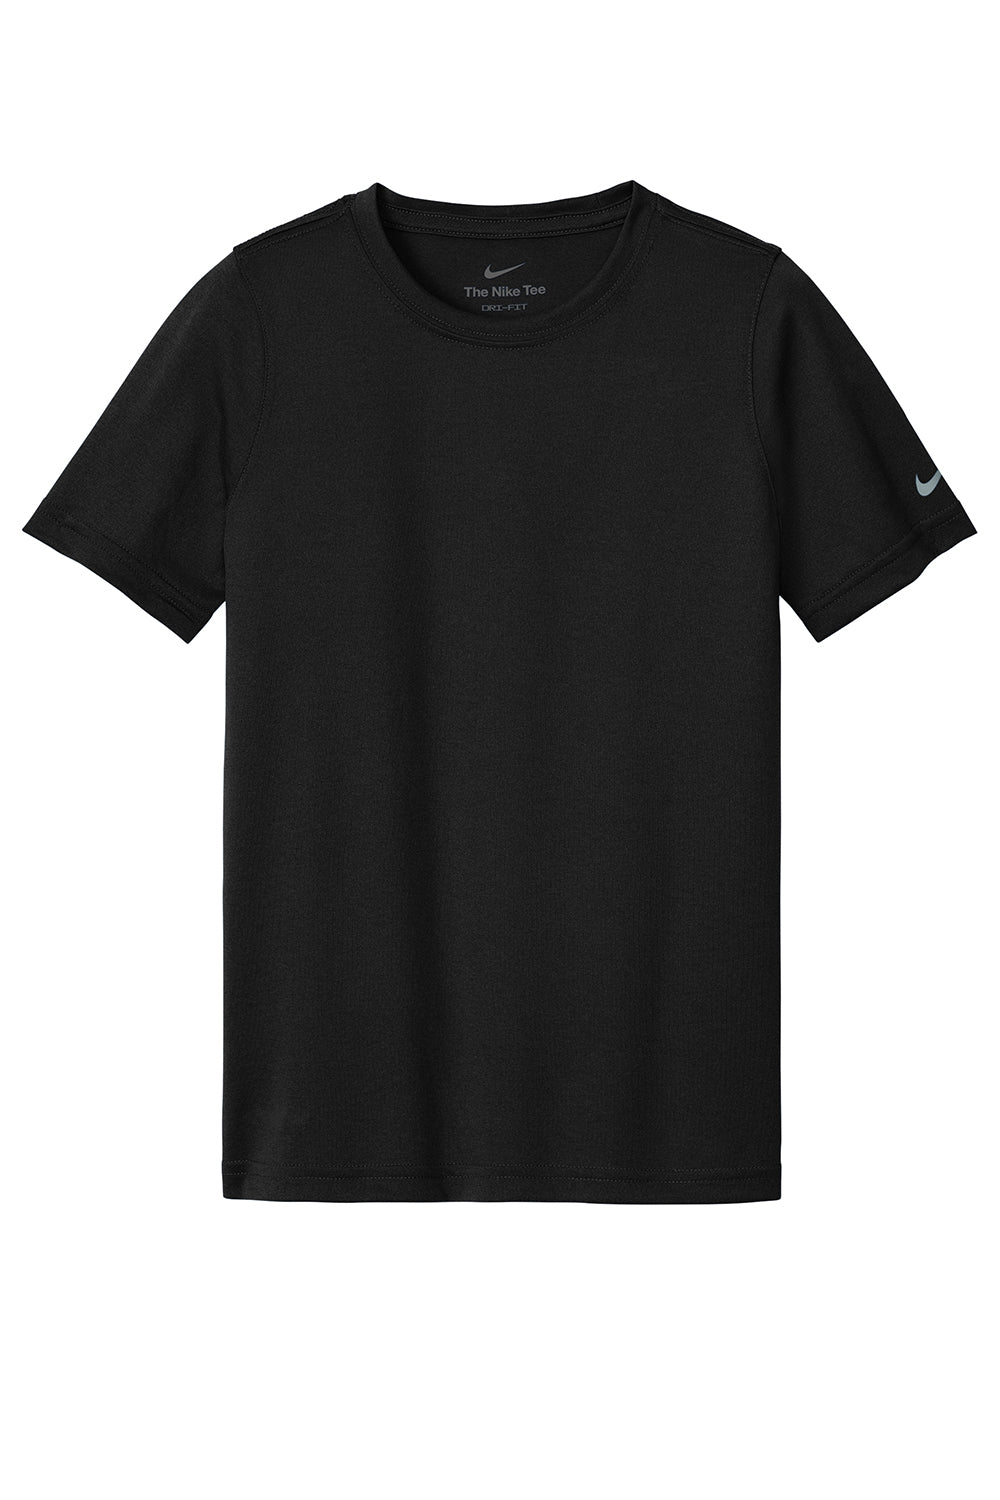 Nike NKDX8787 Youth rLegend Dri-Fit Moisture Wicking Short Sleeve Crewneck T-Shirt Black Flat Front